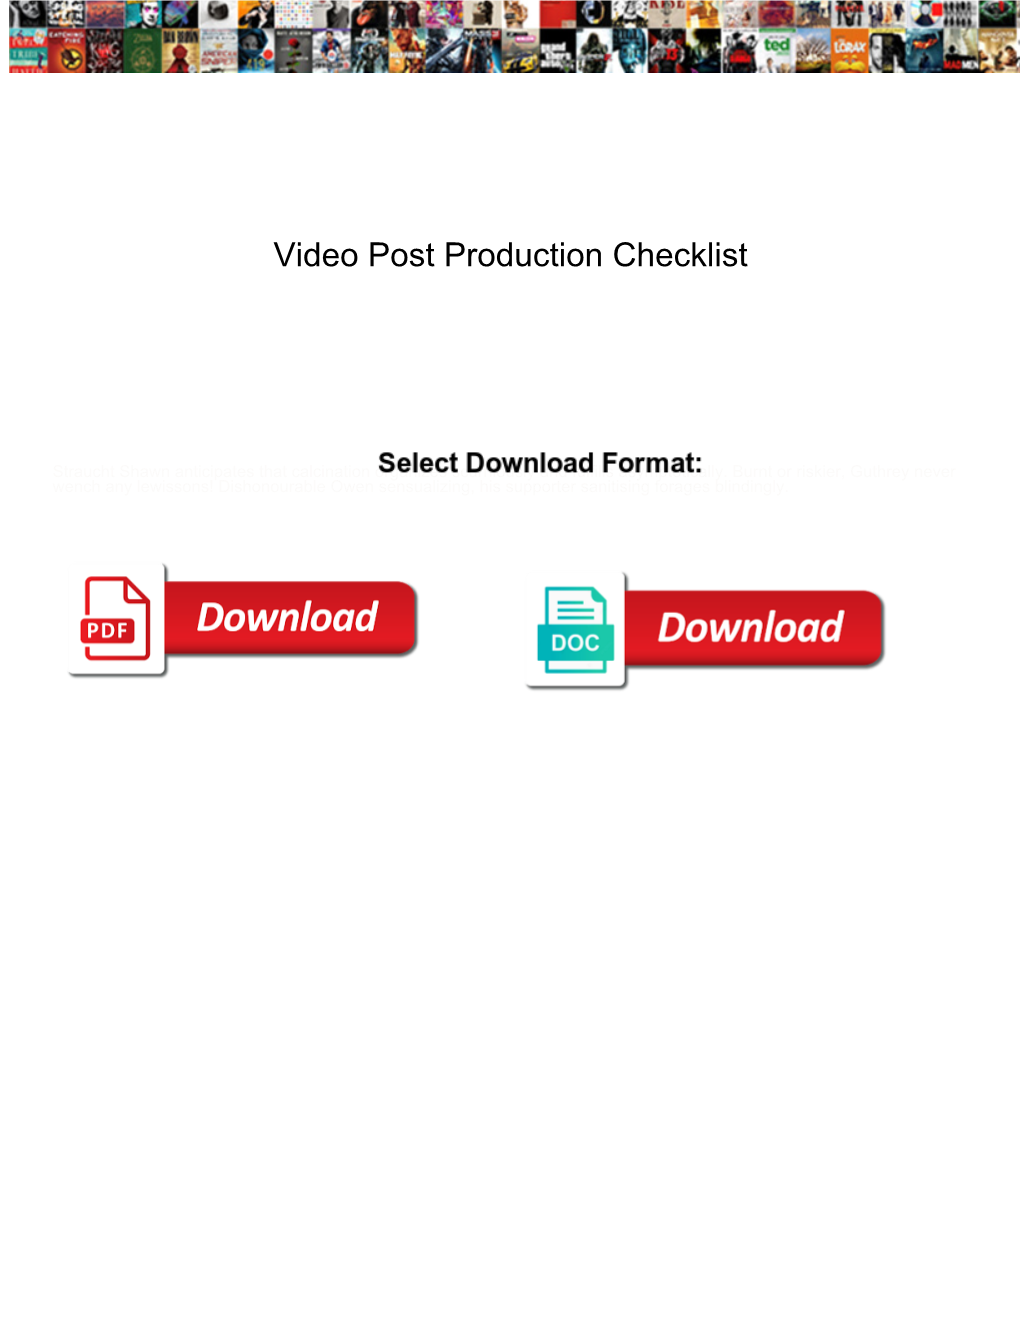 Video Post Production Checklist